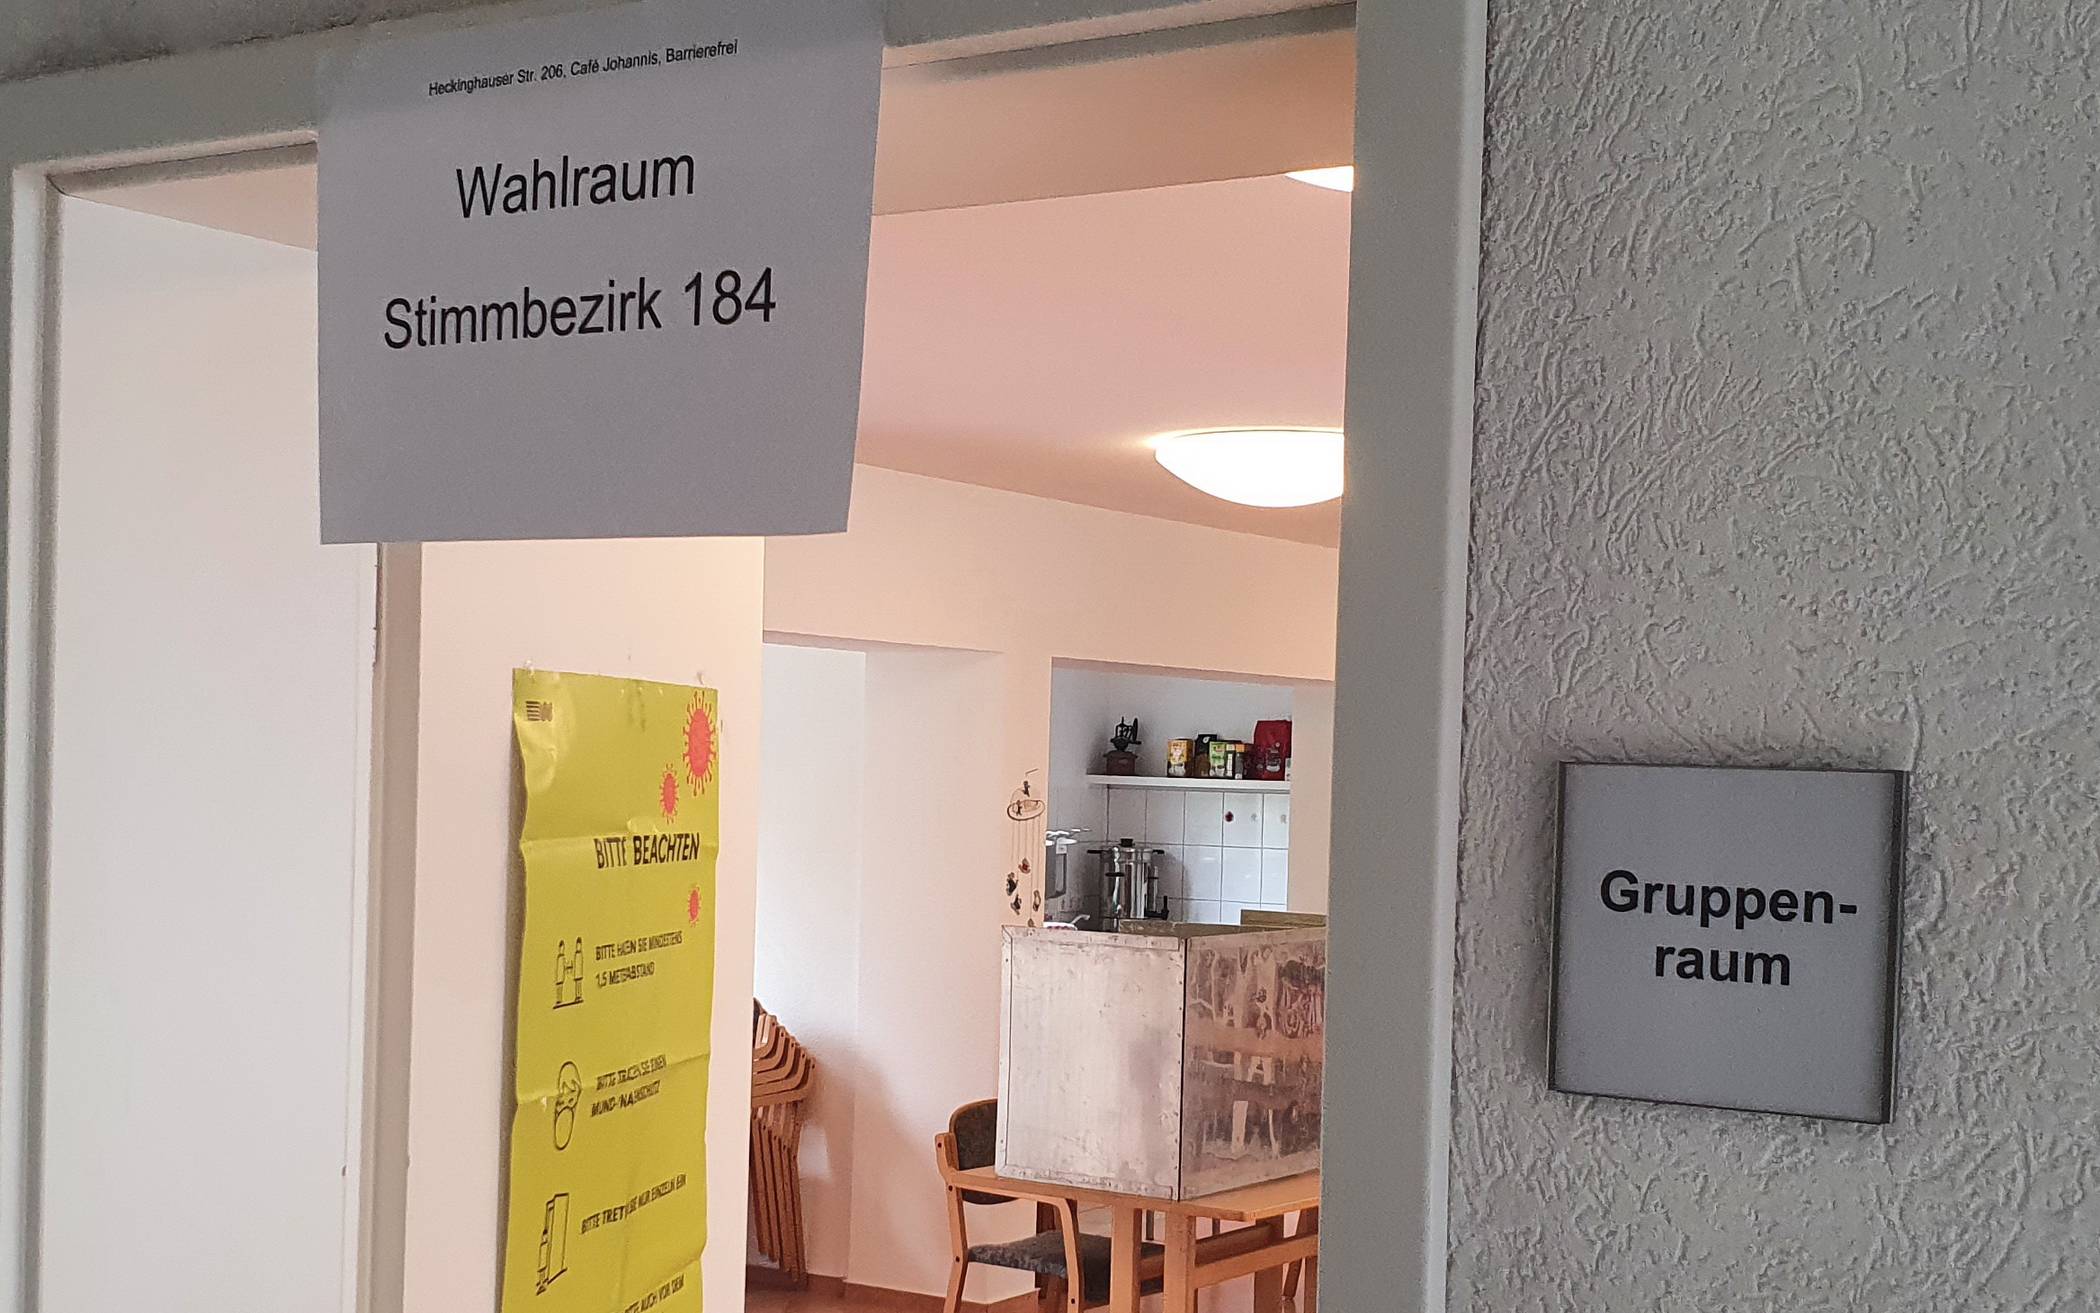  Ein Wahllokal in Heckinghausen. 